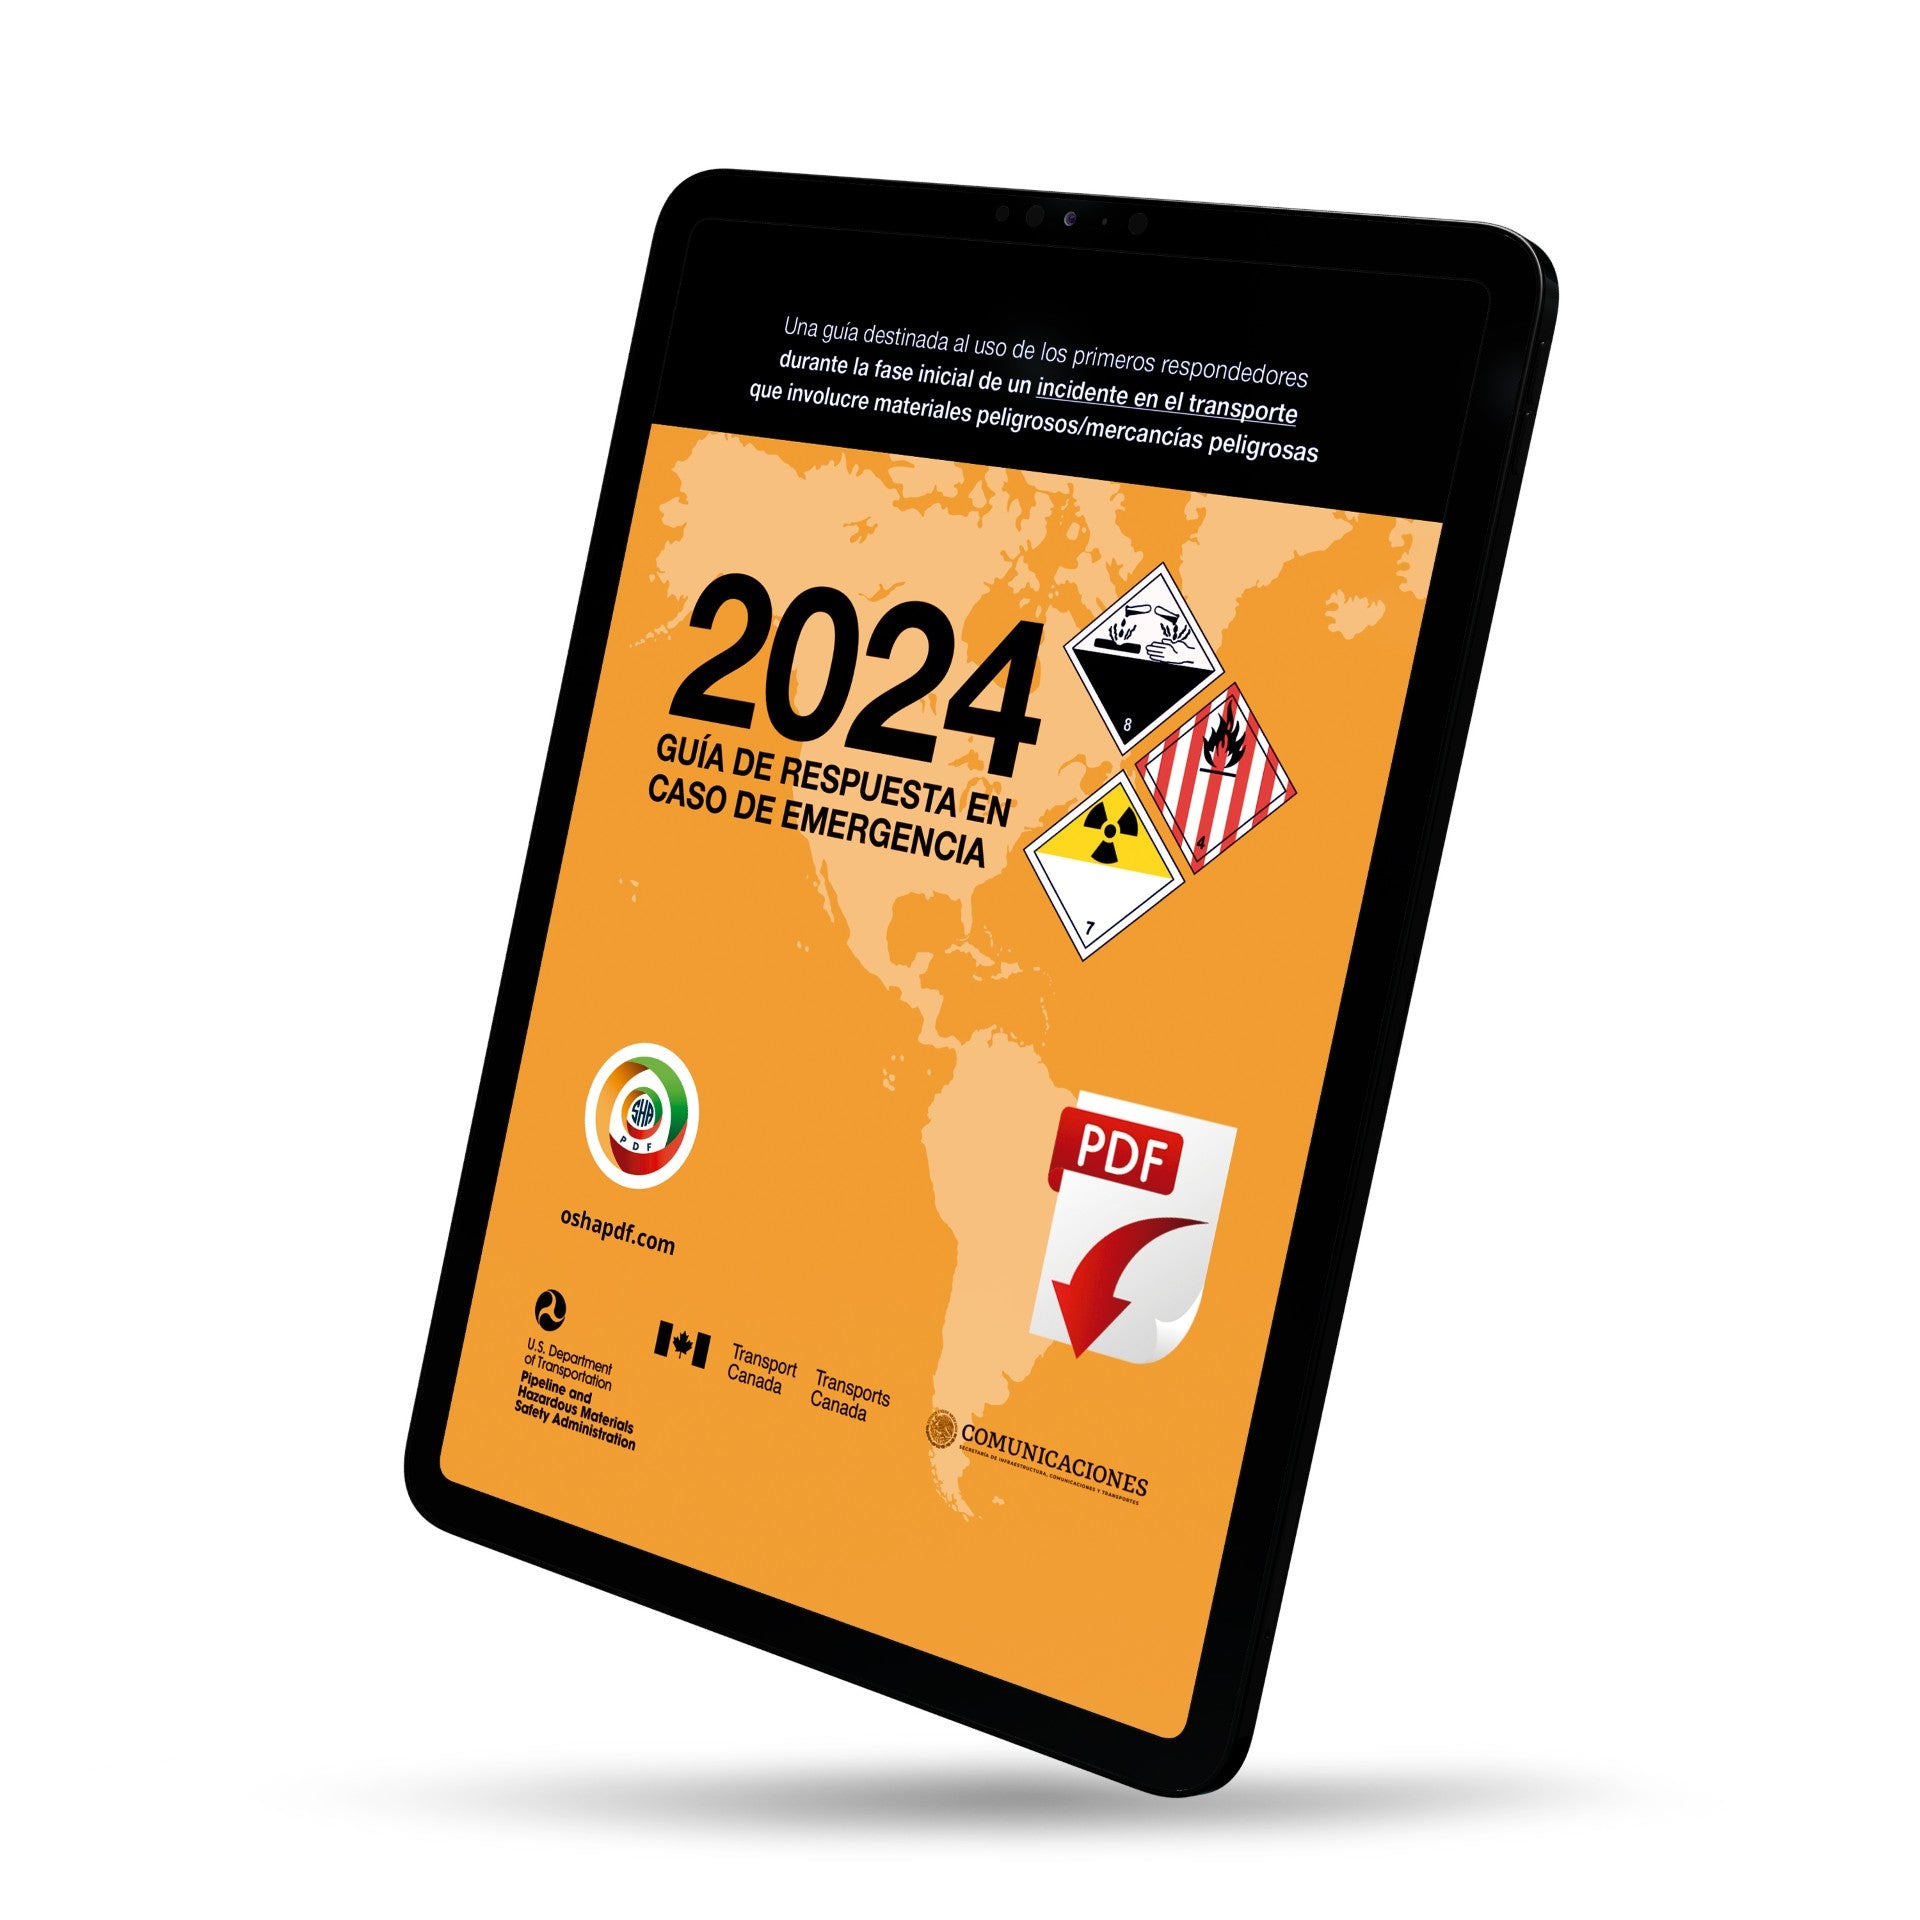 Spanish 2024 Emergency Response Guide (ERG)